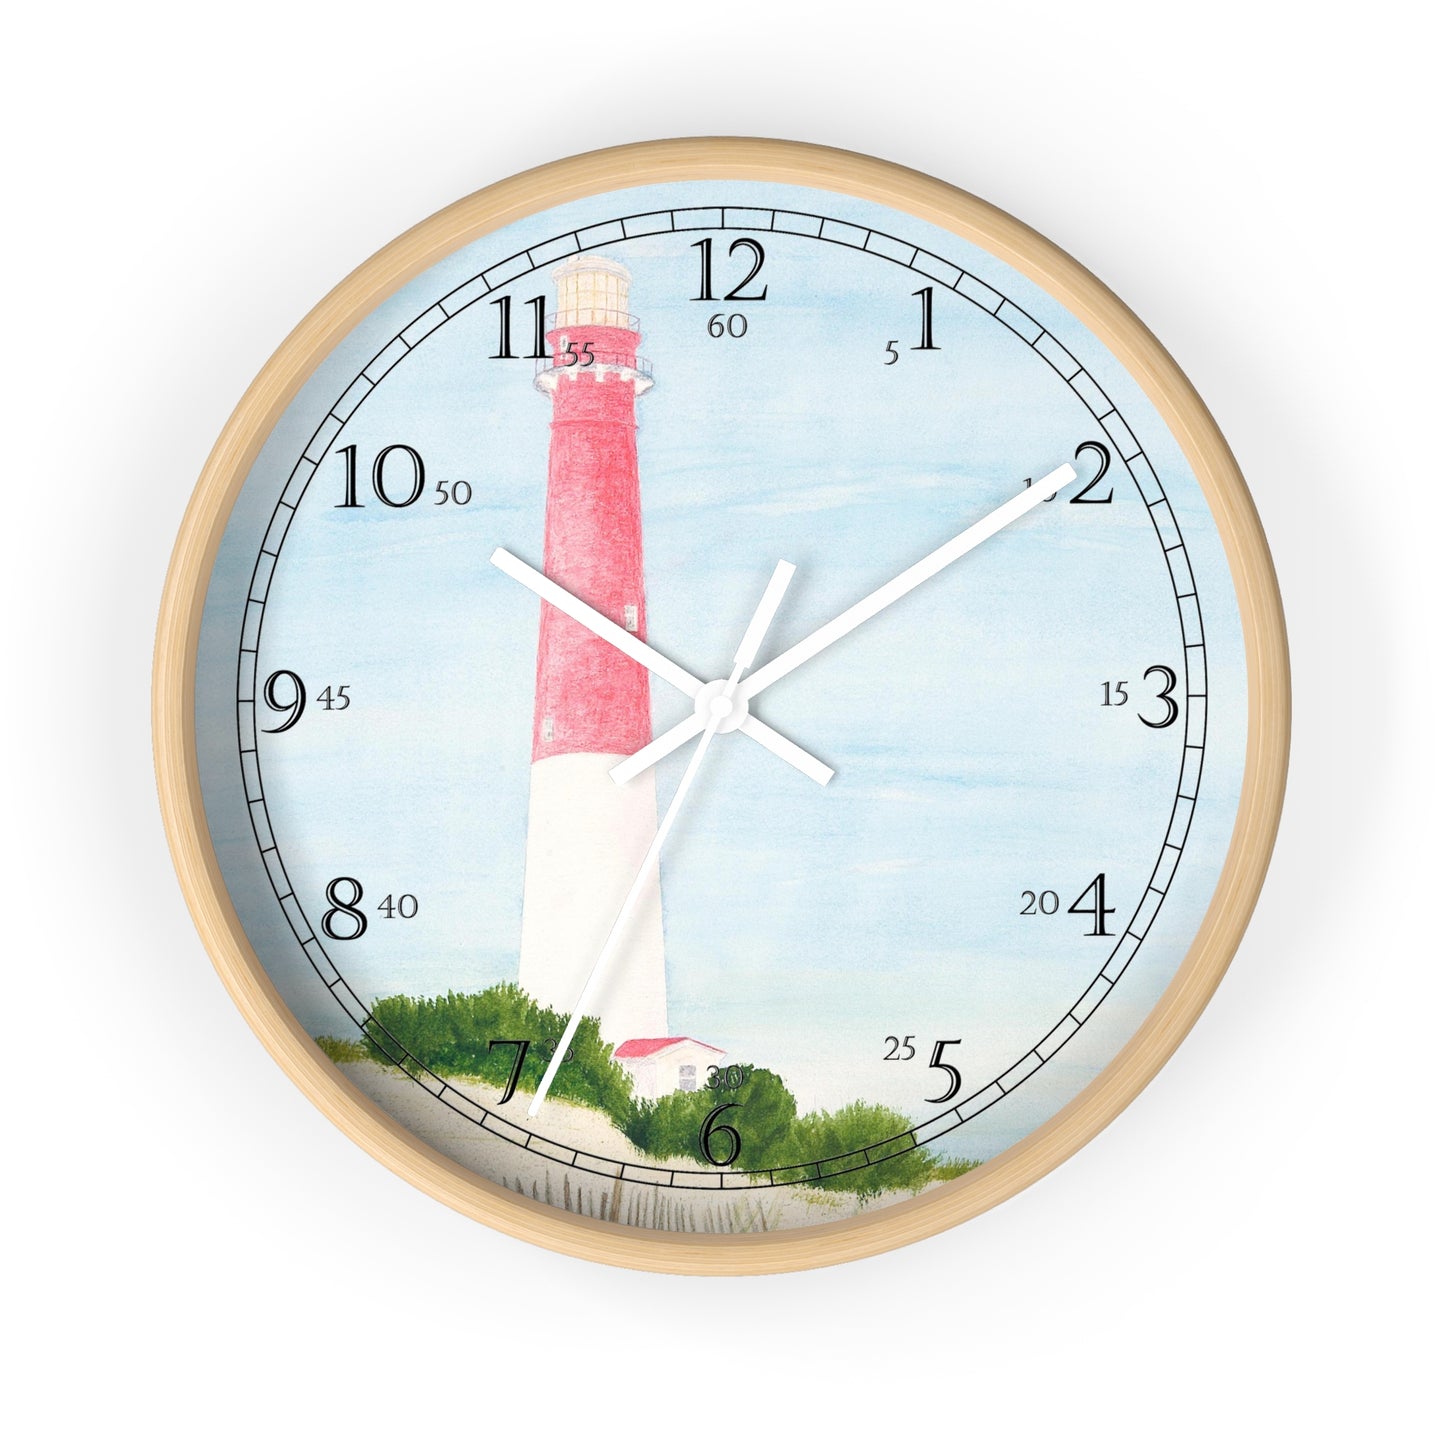 Barnegat Lighthouse English Numeral Clock